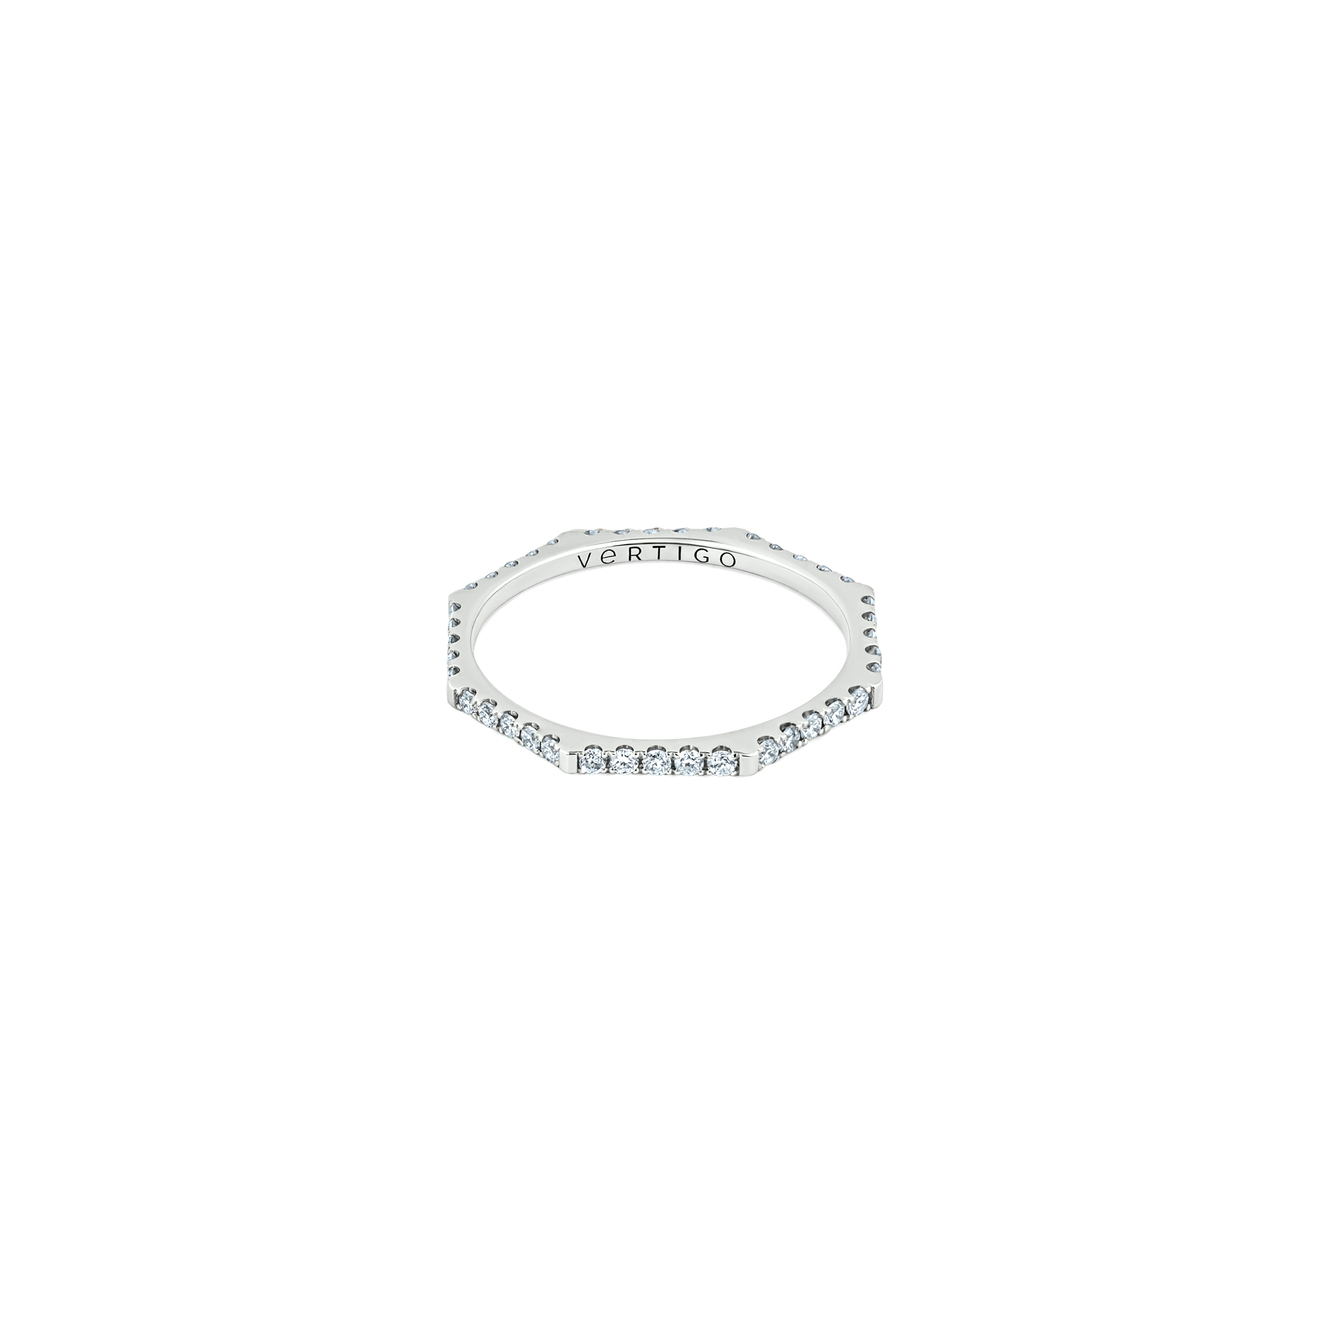 Vertigo Jewellery Lab Кольцо HEXO diamond из белого золота с дорожой из бриллиантов